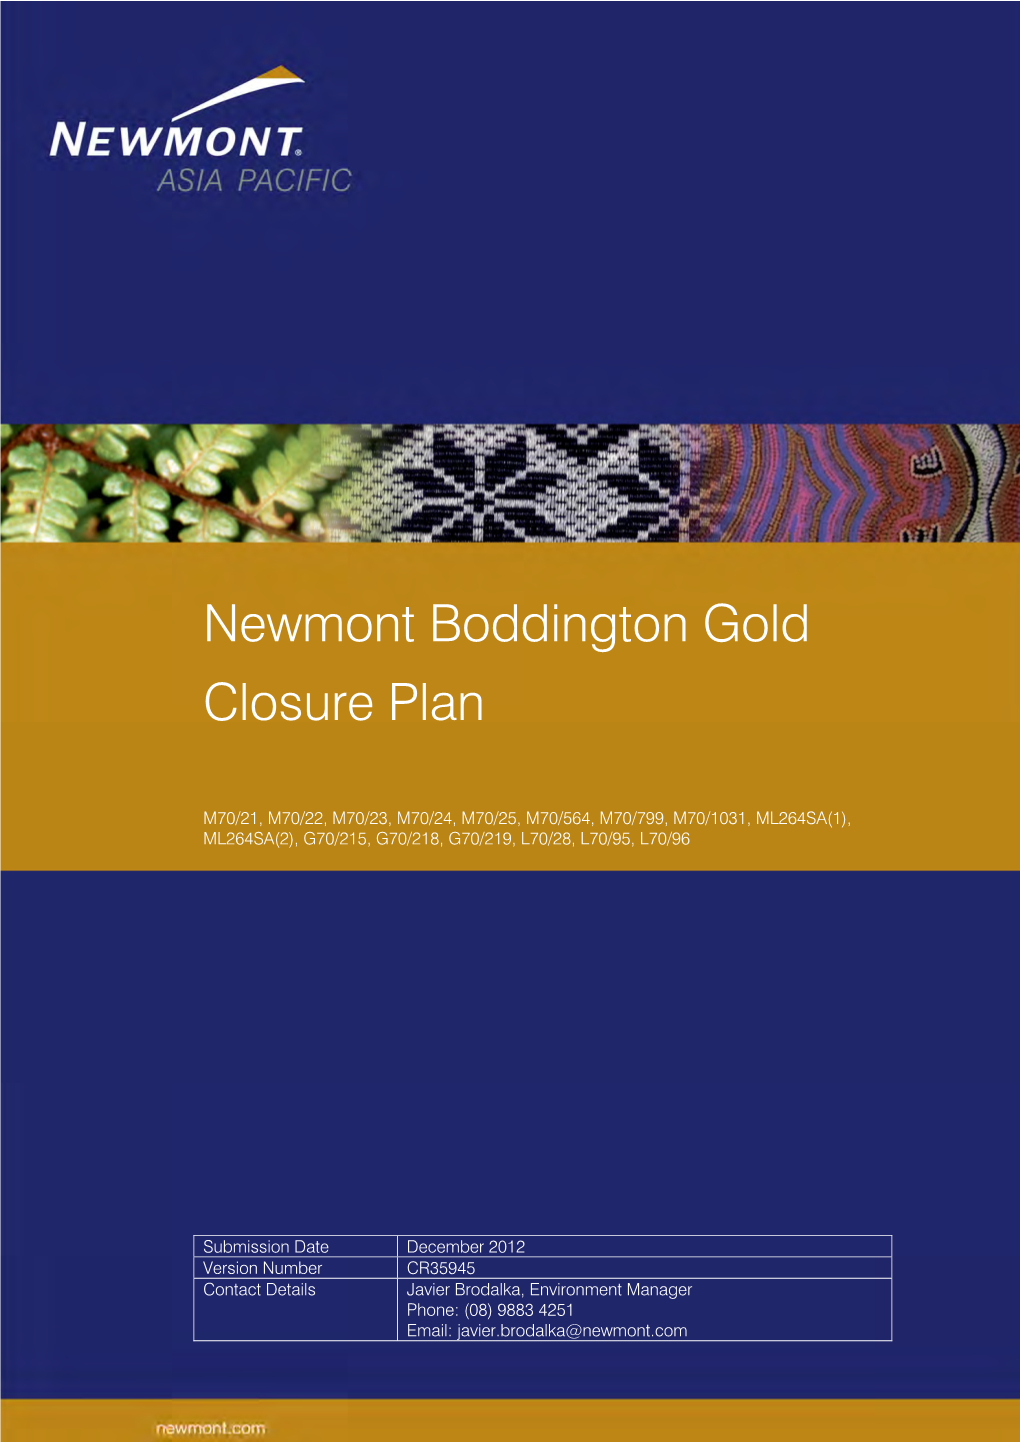 Newmont Boddington Gold Closure Plan